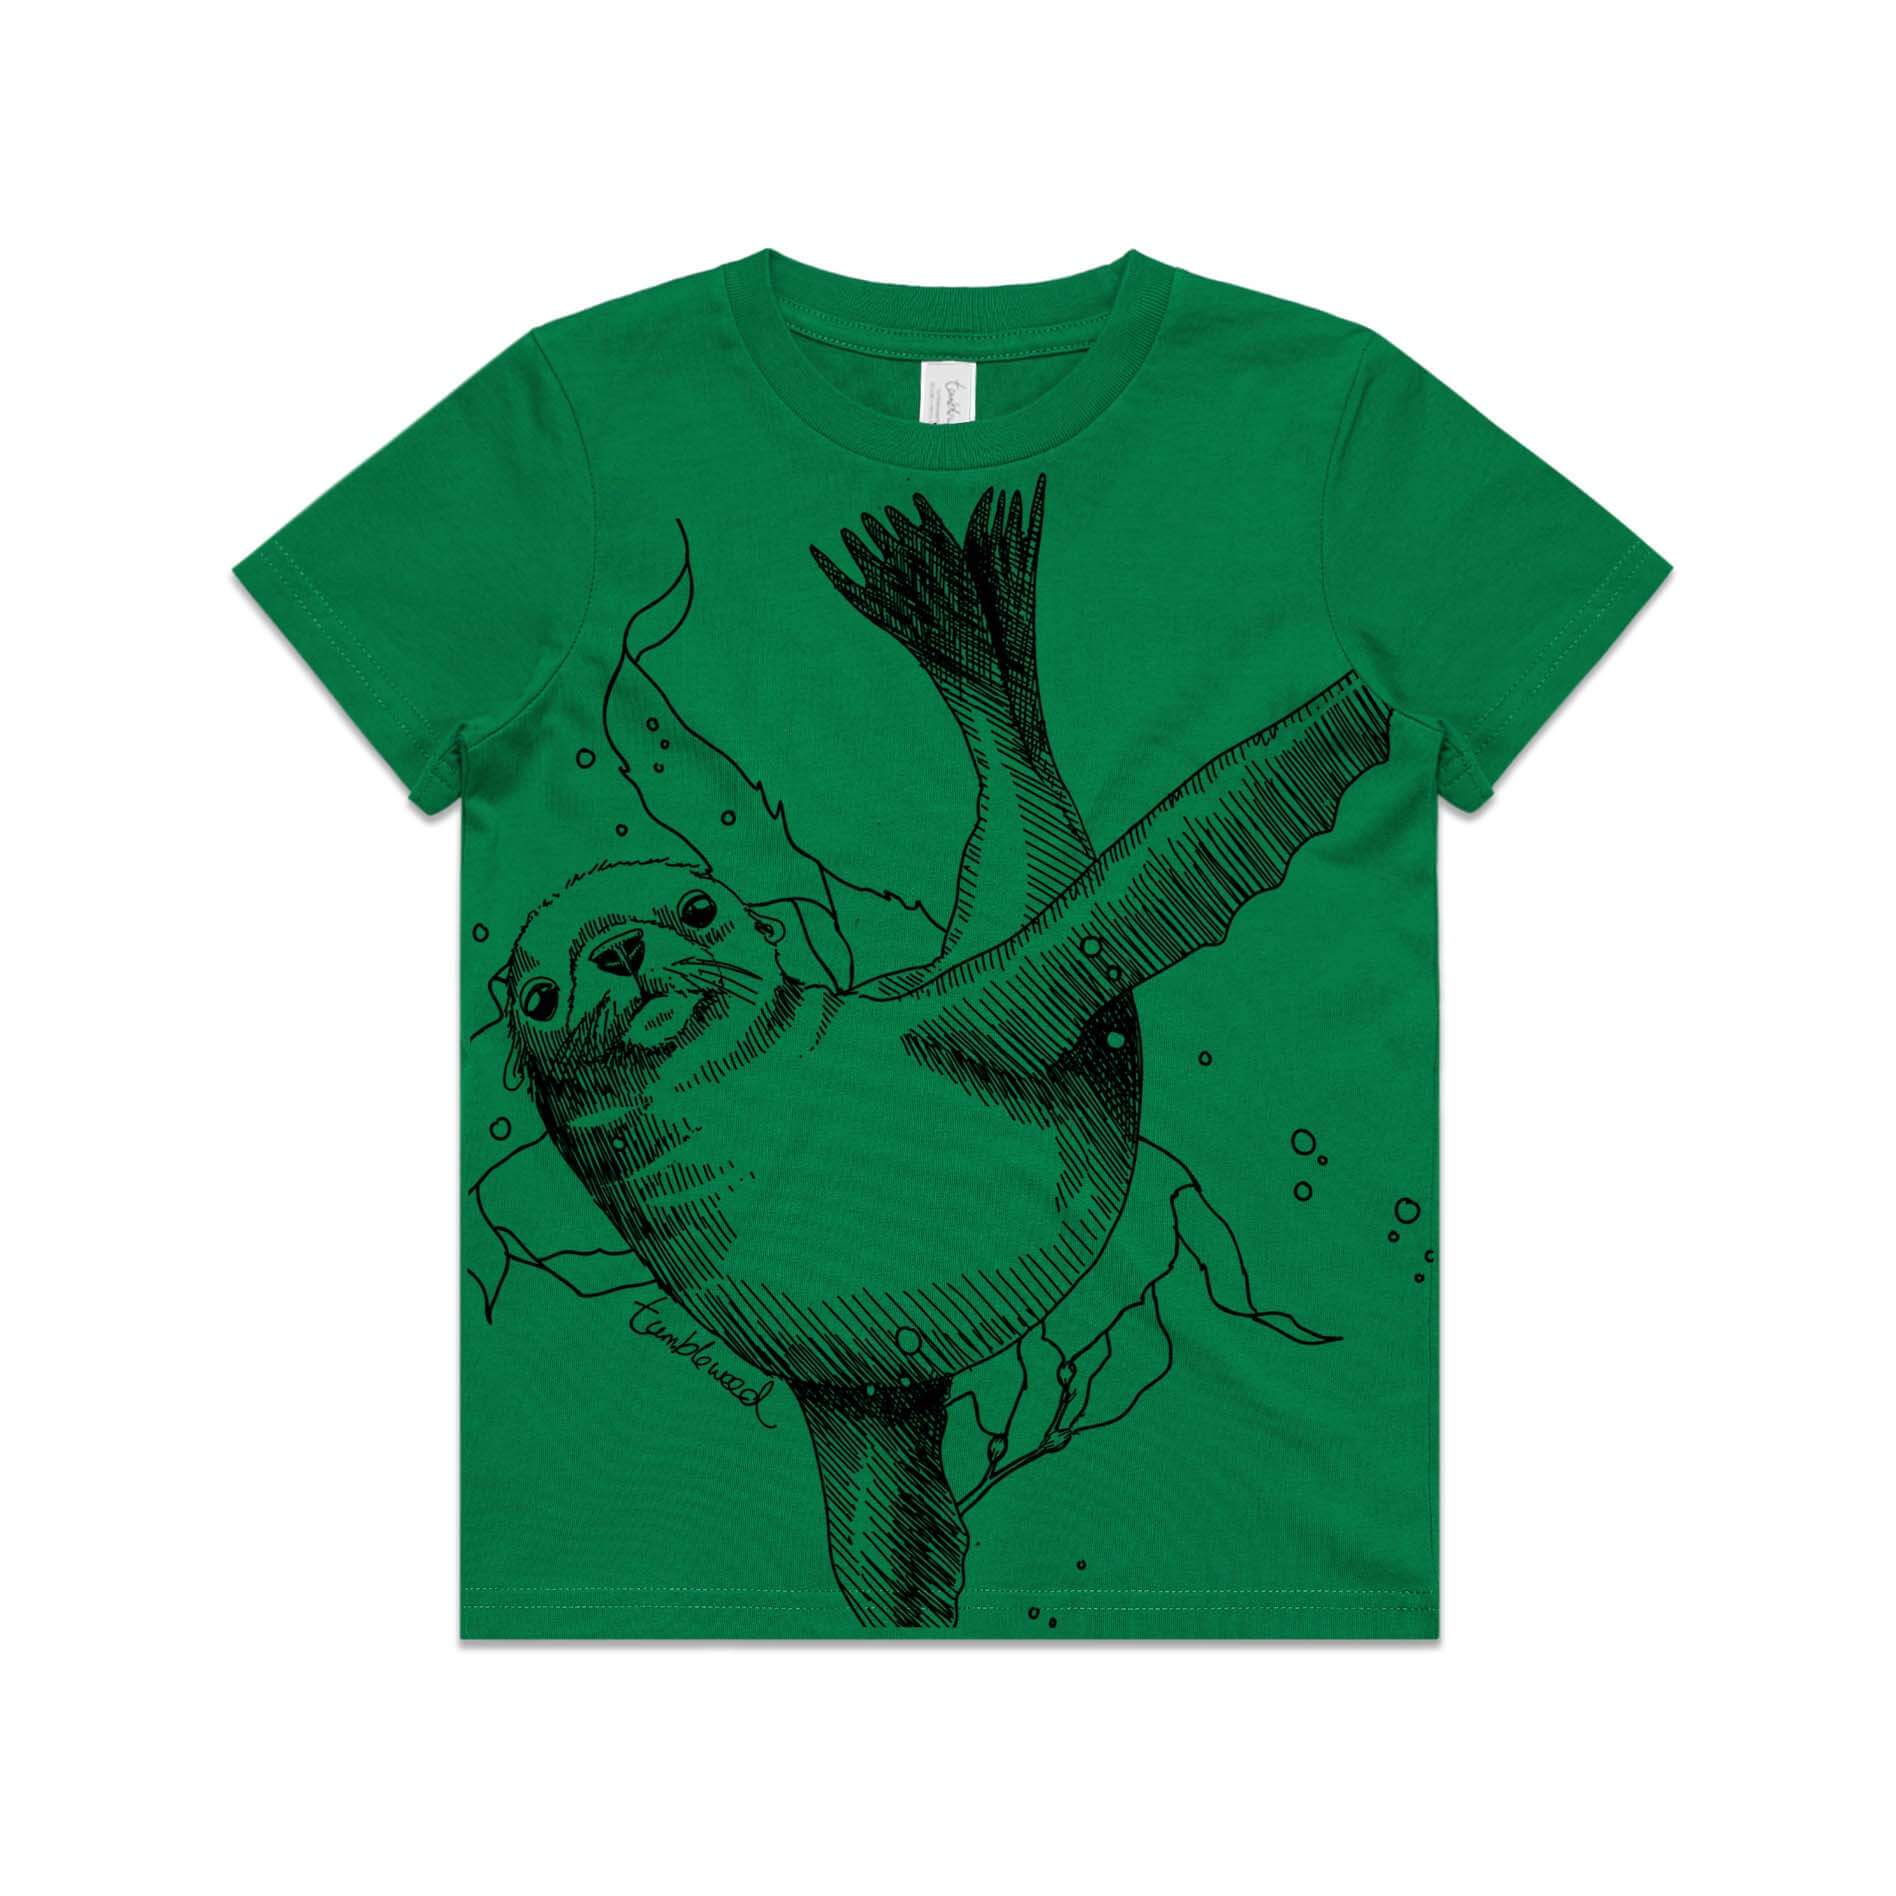 Green, kids’ t-shirt featuring a screen printed New Zealand sea lion design.